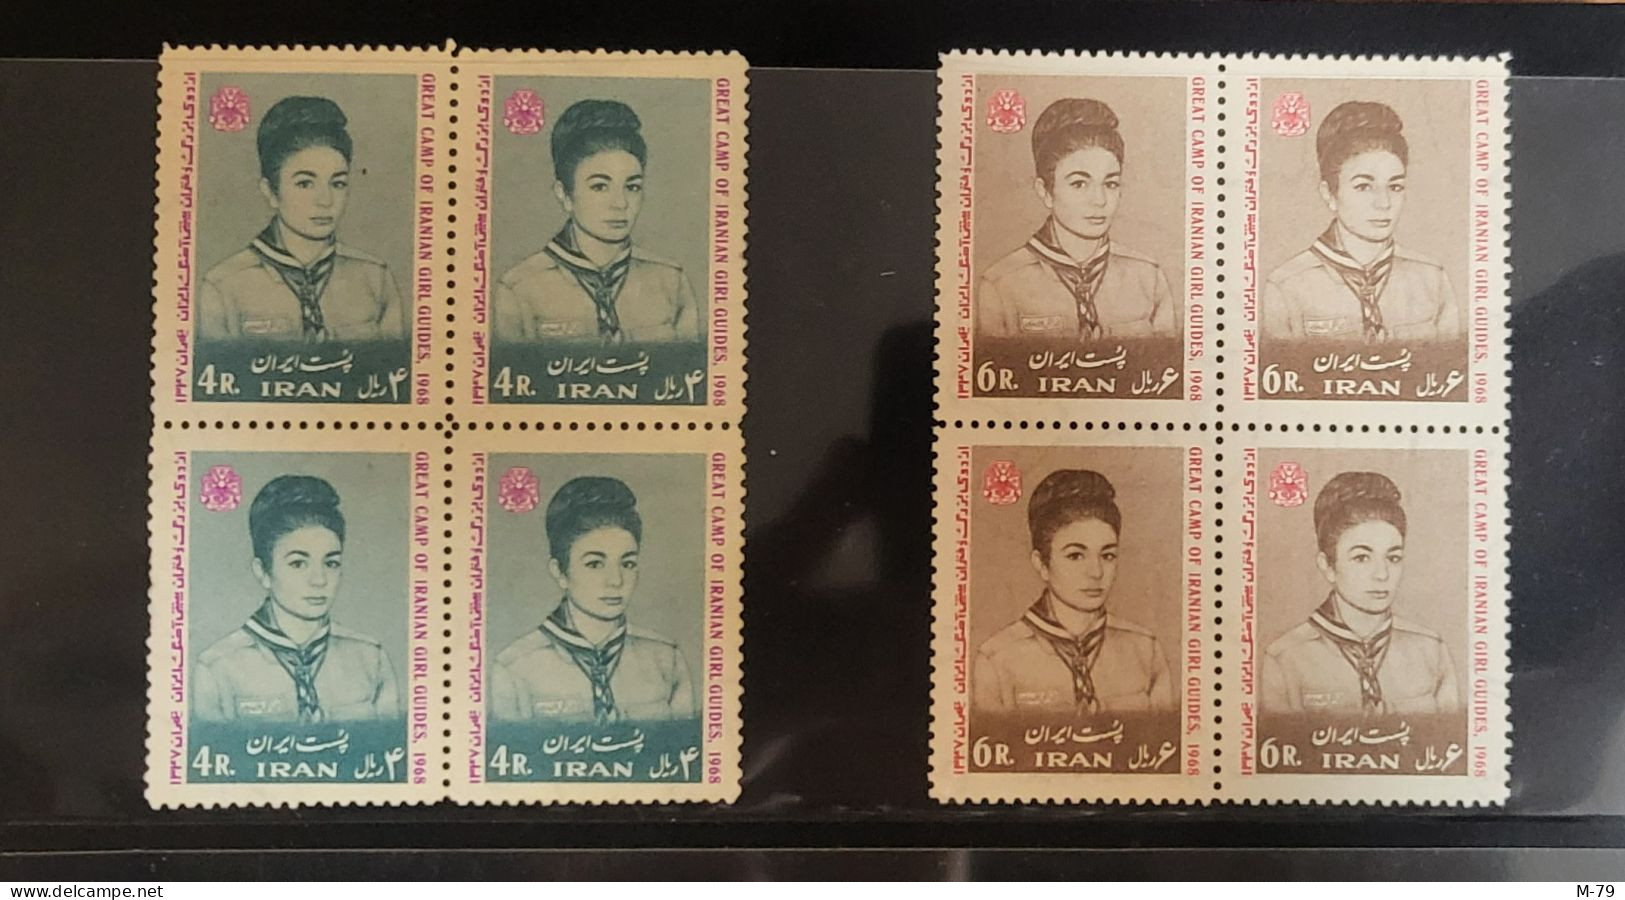 IRAN - Collection Of Singles And Blocks - All MNH - Iran